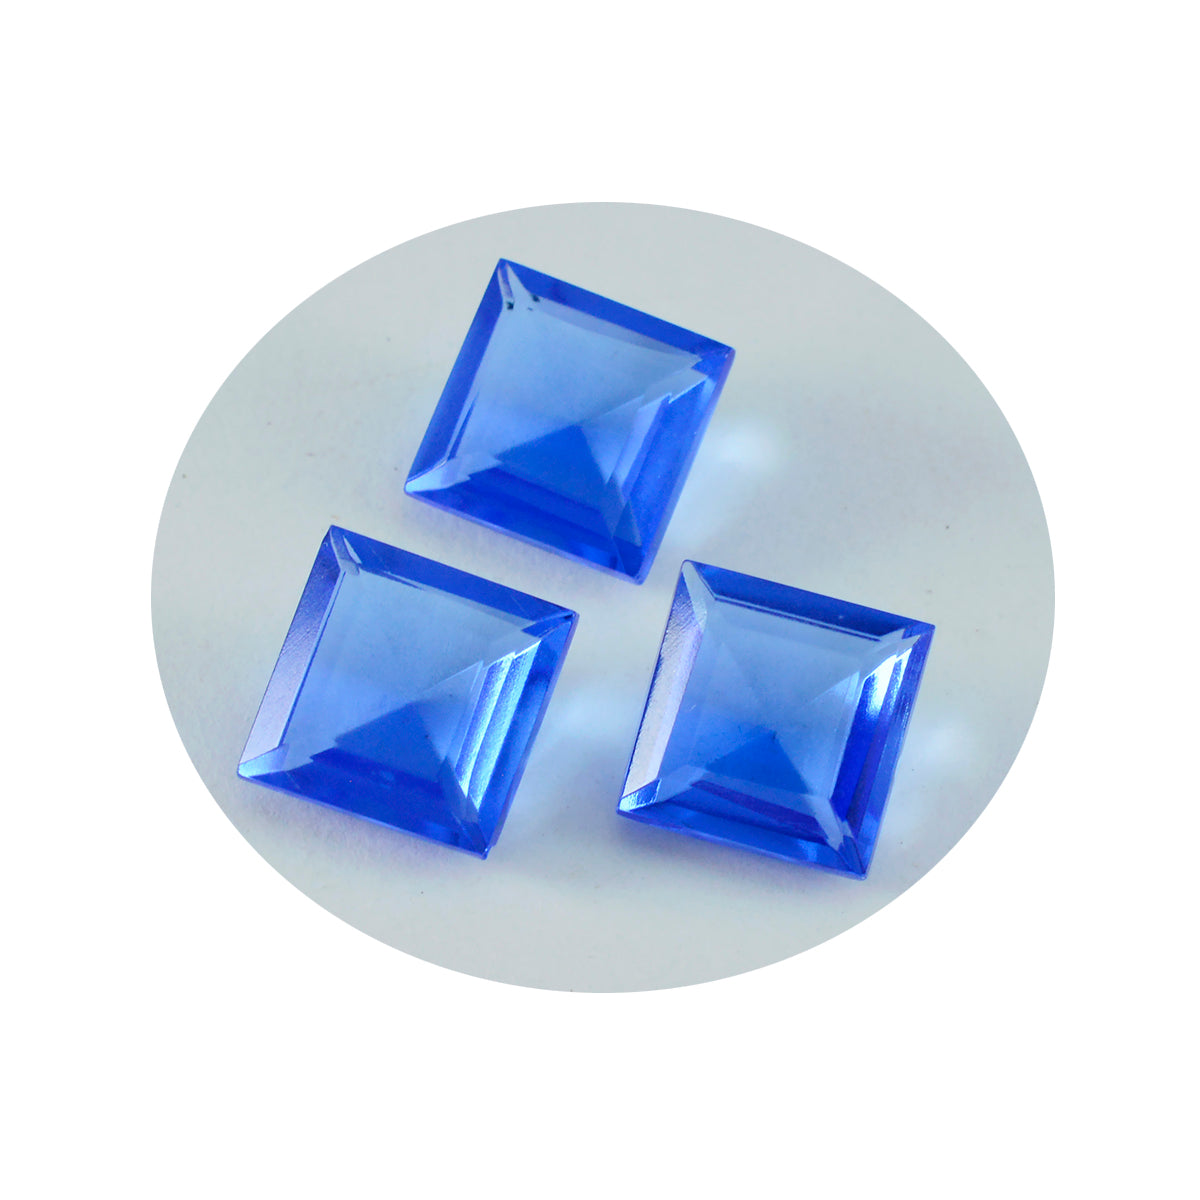 Riyogems 1 Stück blauer Saphir, CZ, facettiert, 14 x 14 mm, quadratische Form, hübscher Qualitäts-Edelstein